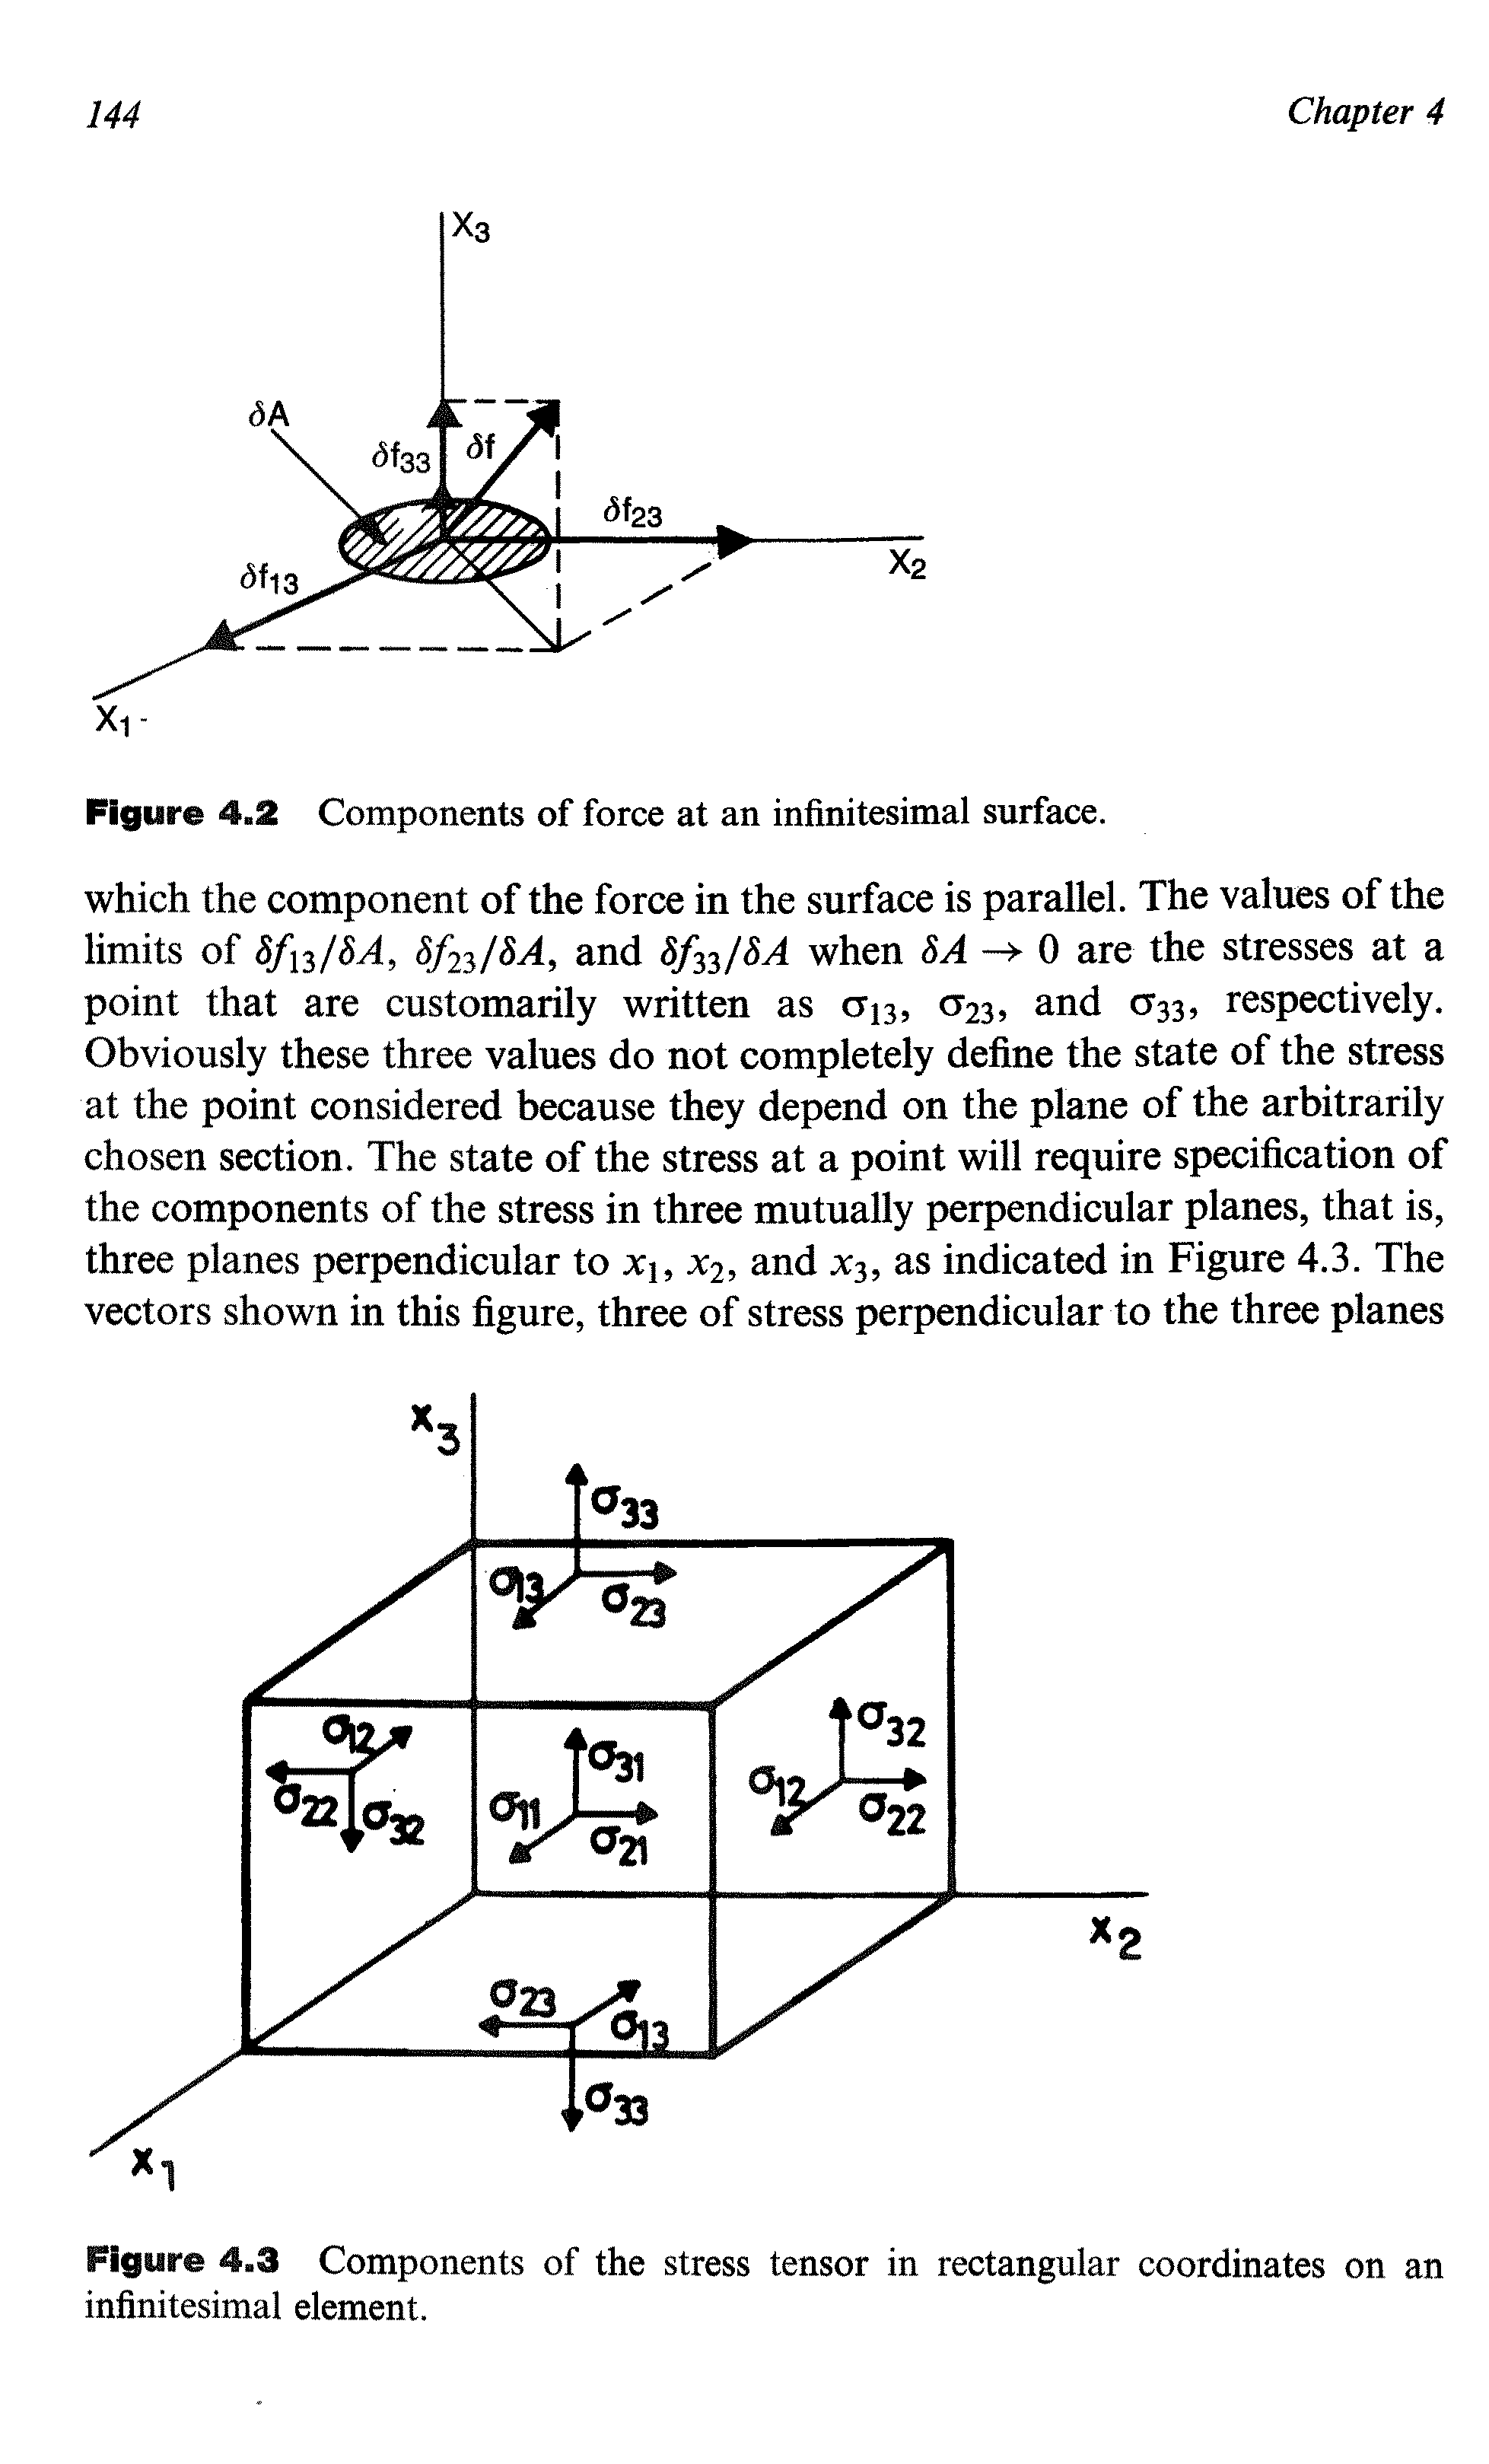 Figure 4.3 Components of the stress tensor in rectangular coordinates on an infinitesimal element.